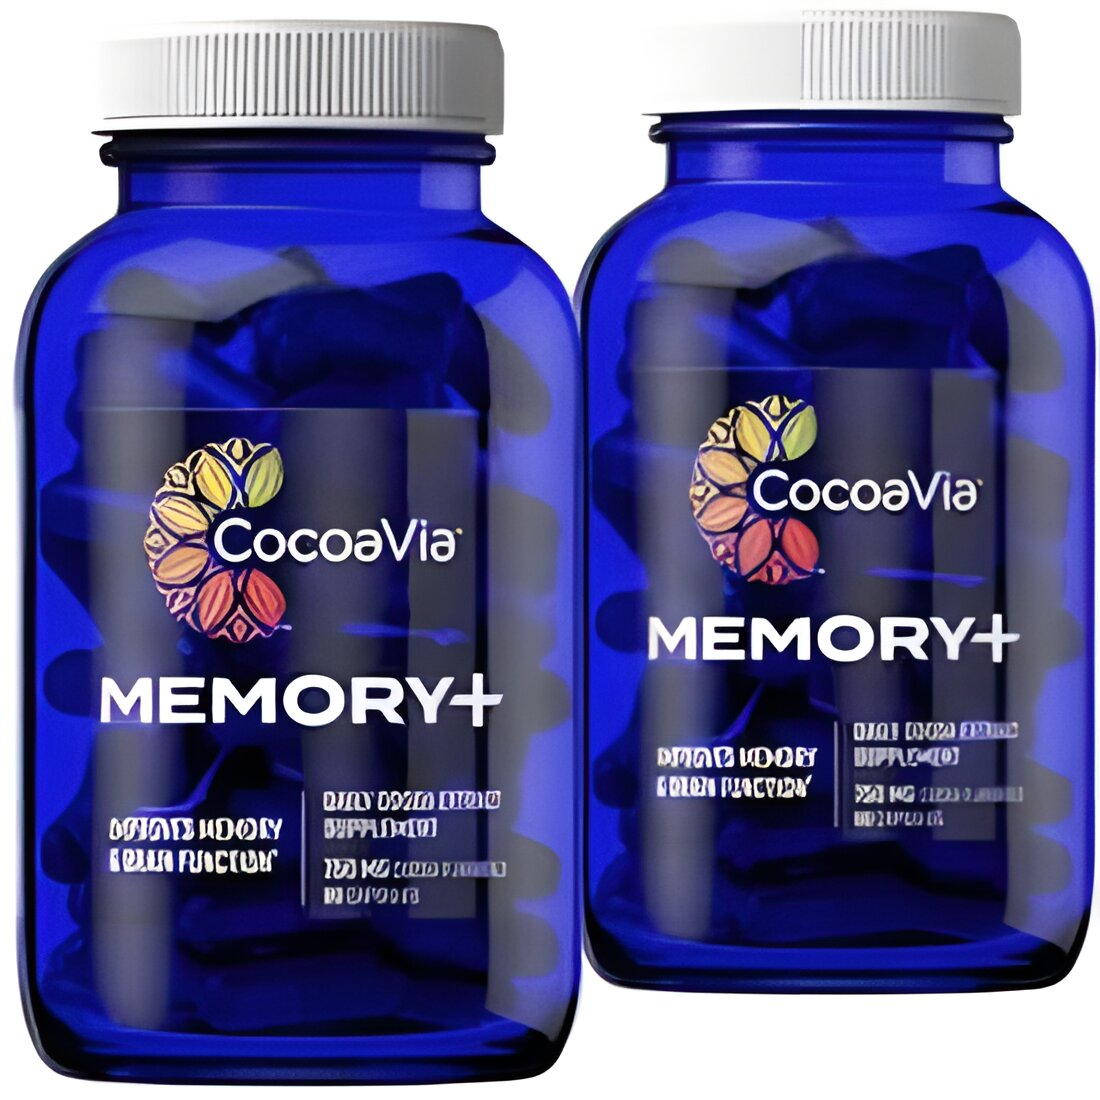 Free CocoaVia Memory Supplement